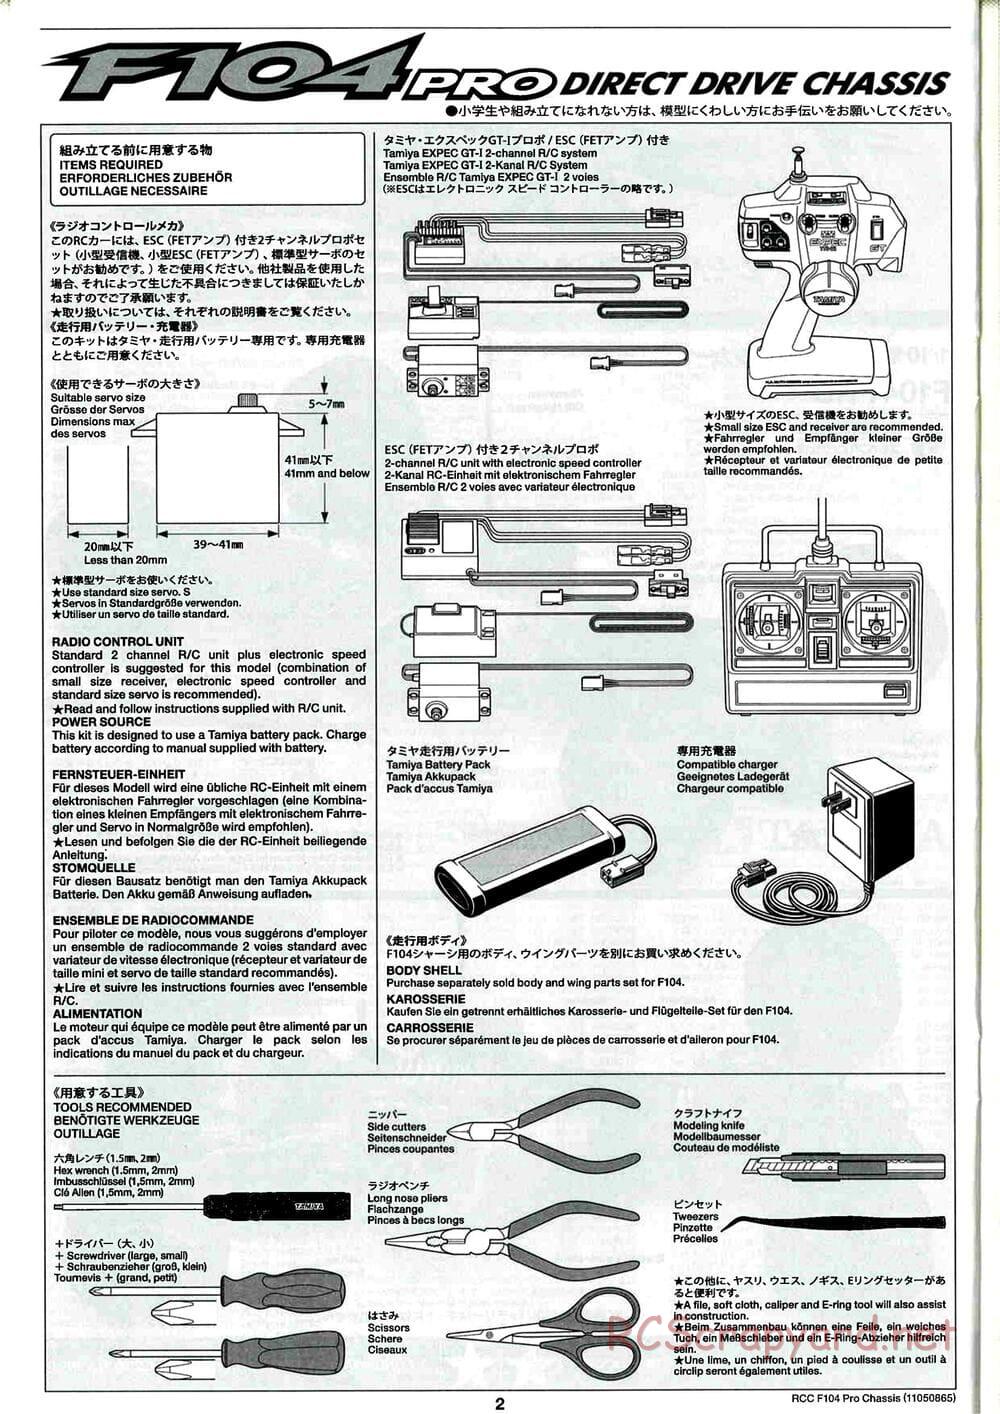 Tamiya - F104 Pro Chassis - Manual - Page 2